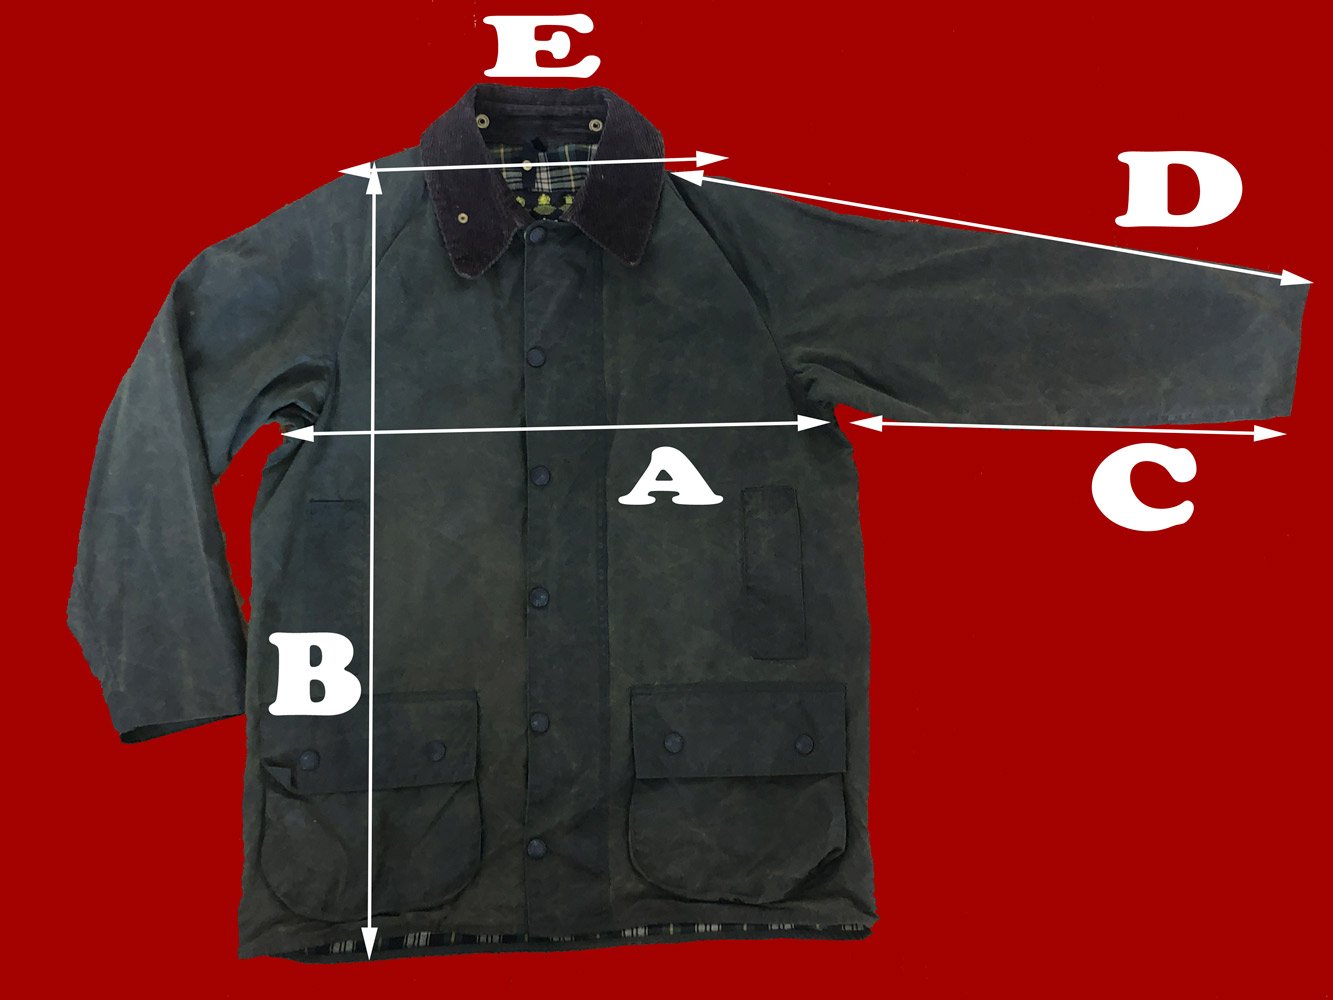 Giacca Barbour impermeabile Wetland Blu XL  Man Navy Waterproof cotton jacket size XL